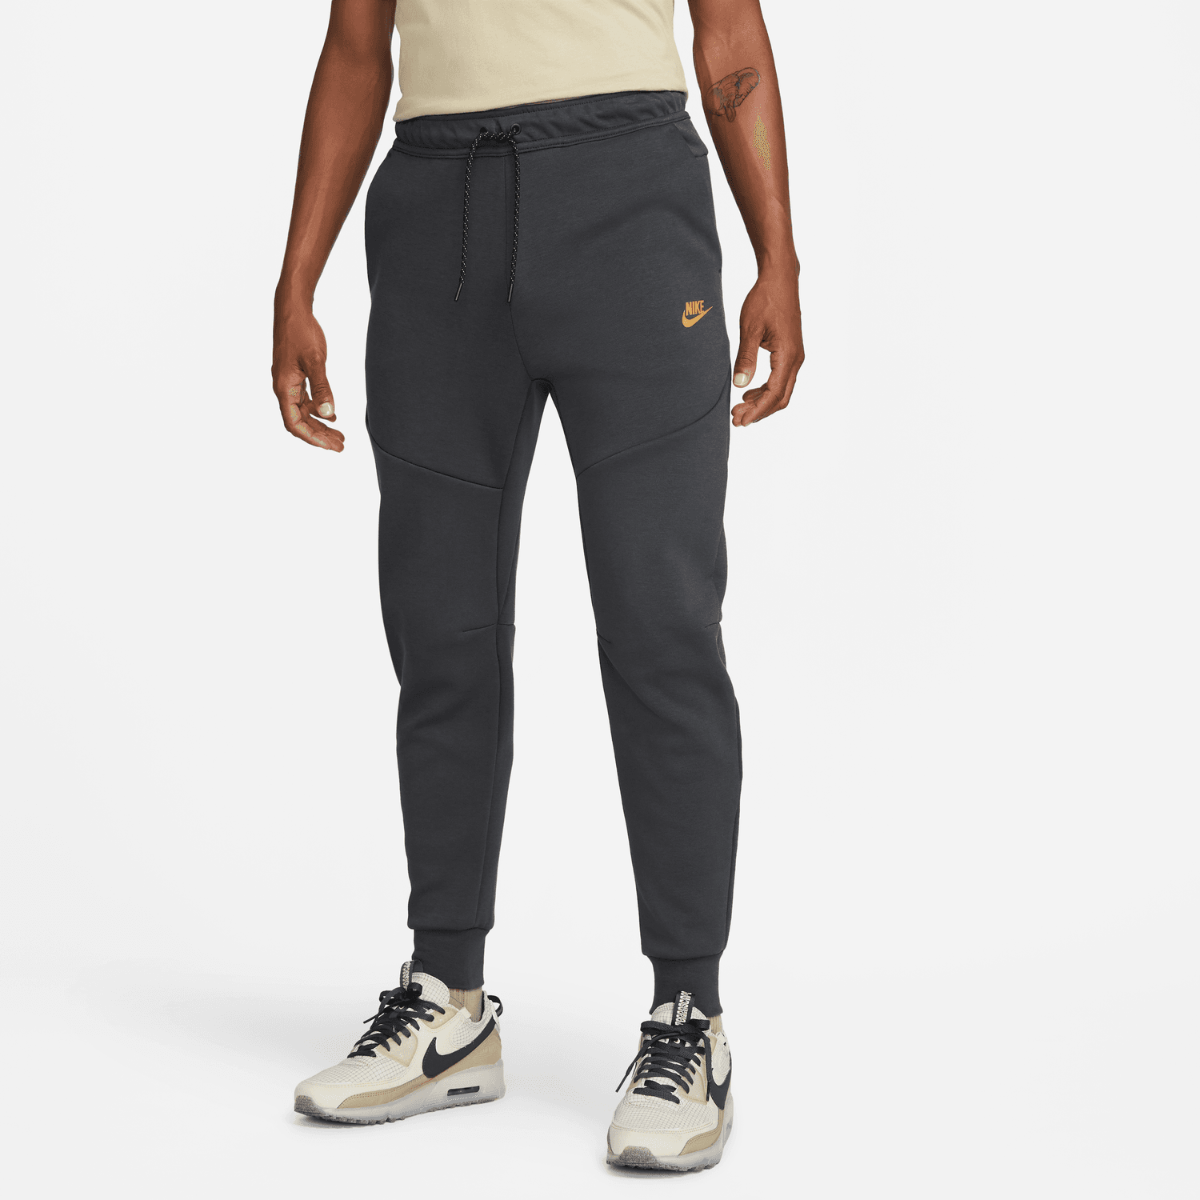 Pantalón Jogging Nike Sportswear Tech Fleece - Gris/Noir/Or